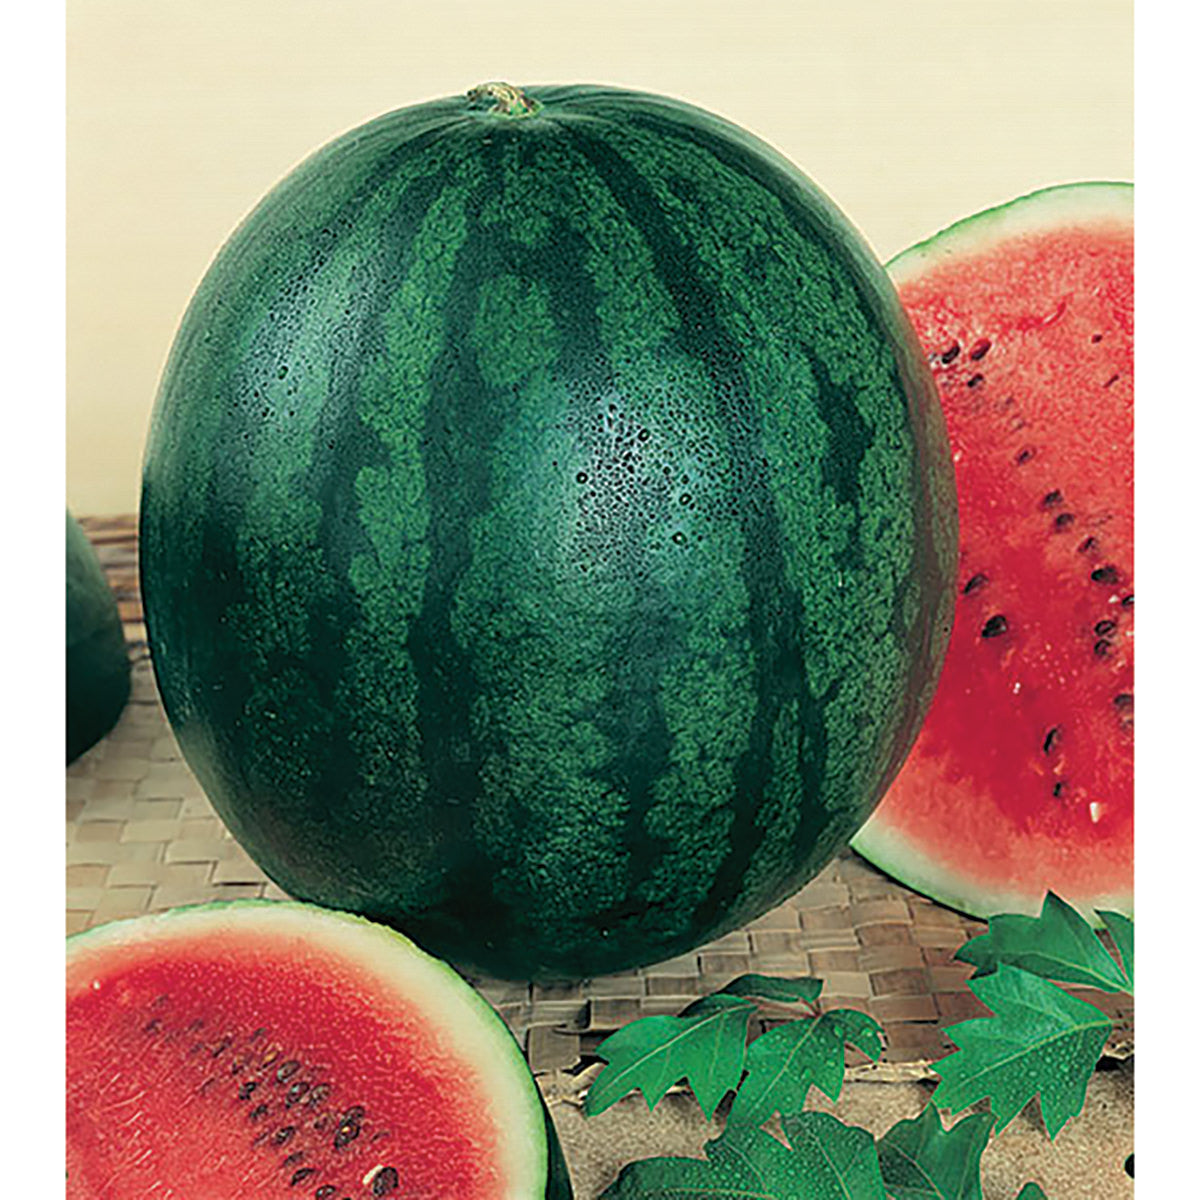 Certified Organic Sugar Baby Watermelon Seeds